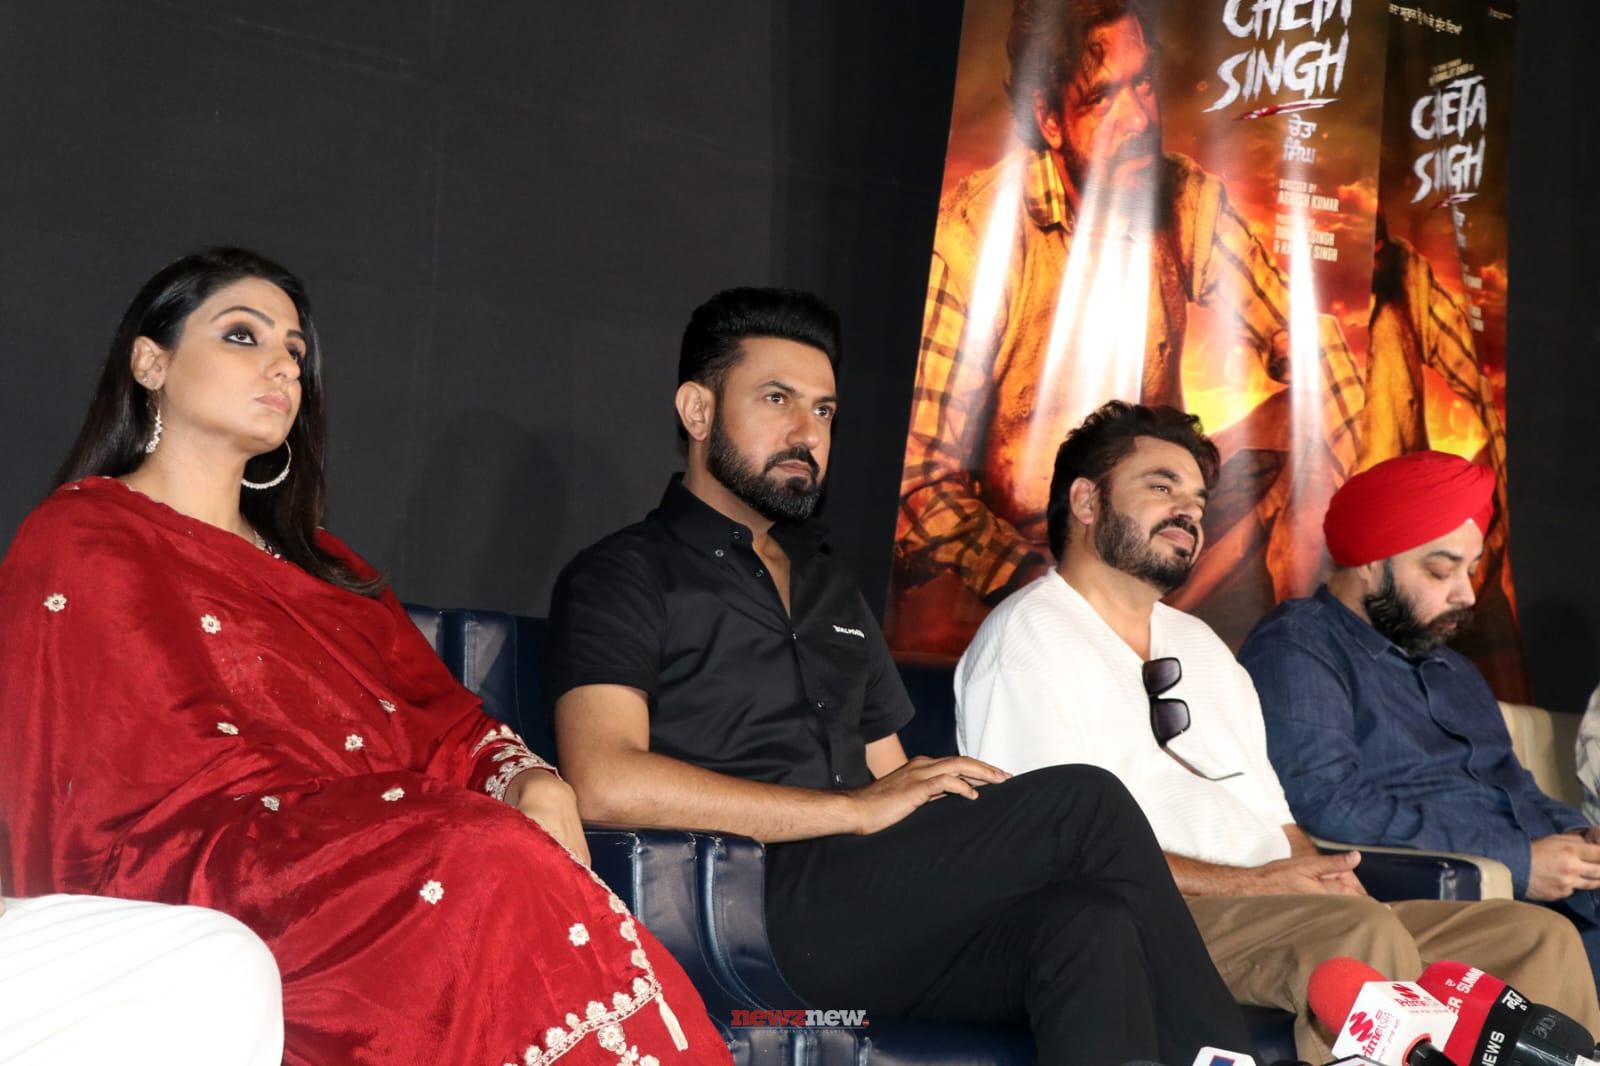 Get ready to witness a groundbreaking moment in Punjabi cinema - ‘Cheta Singh’